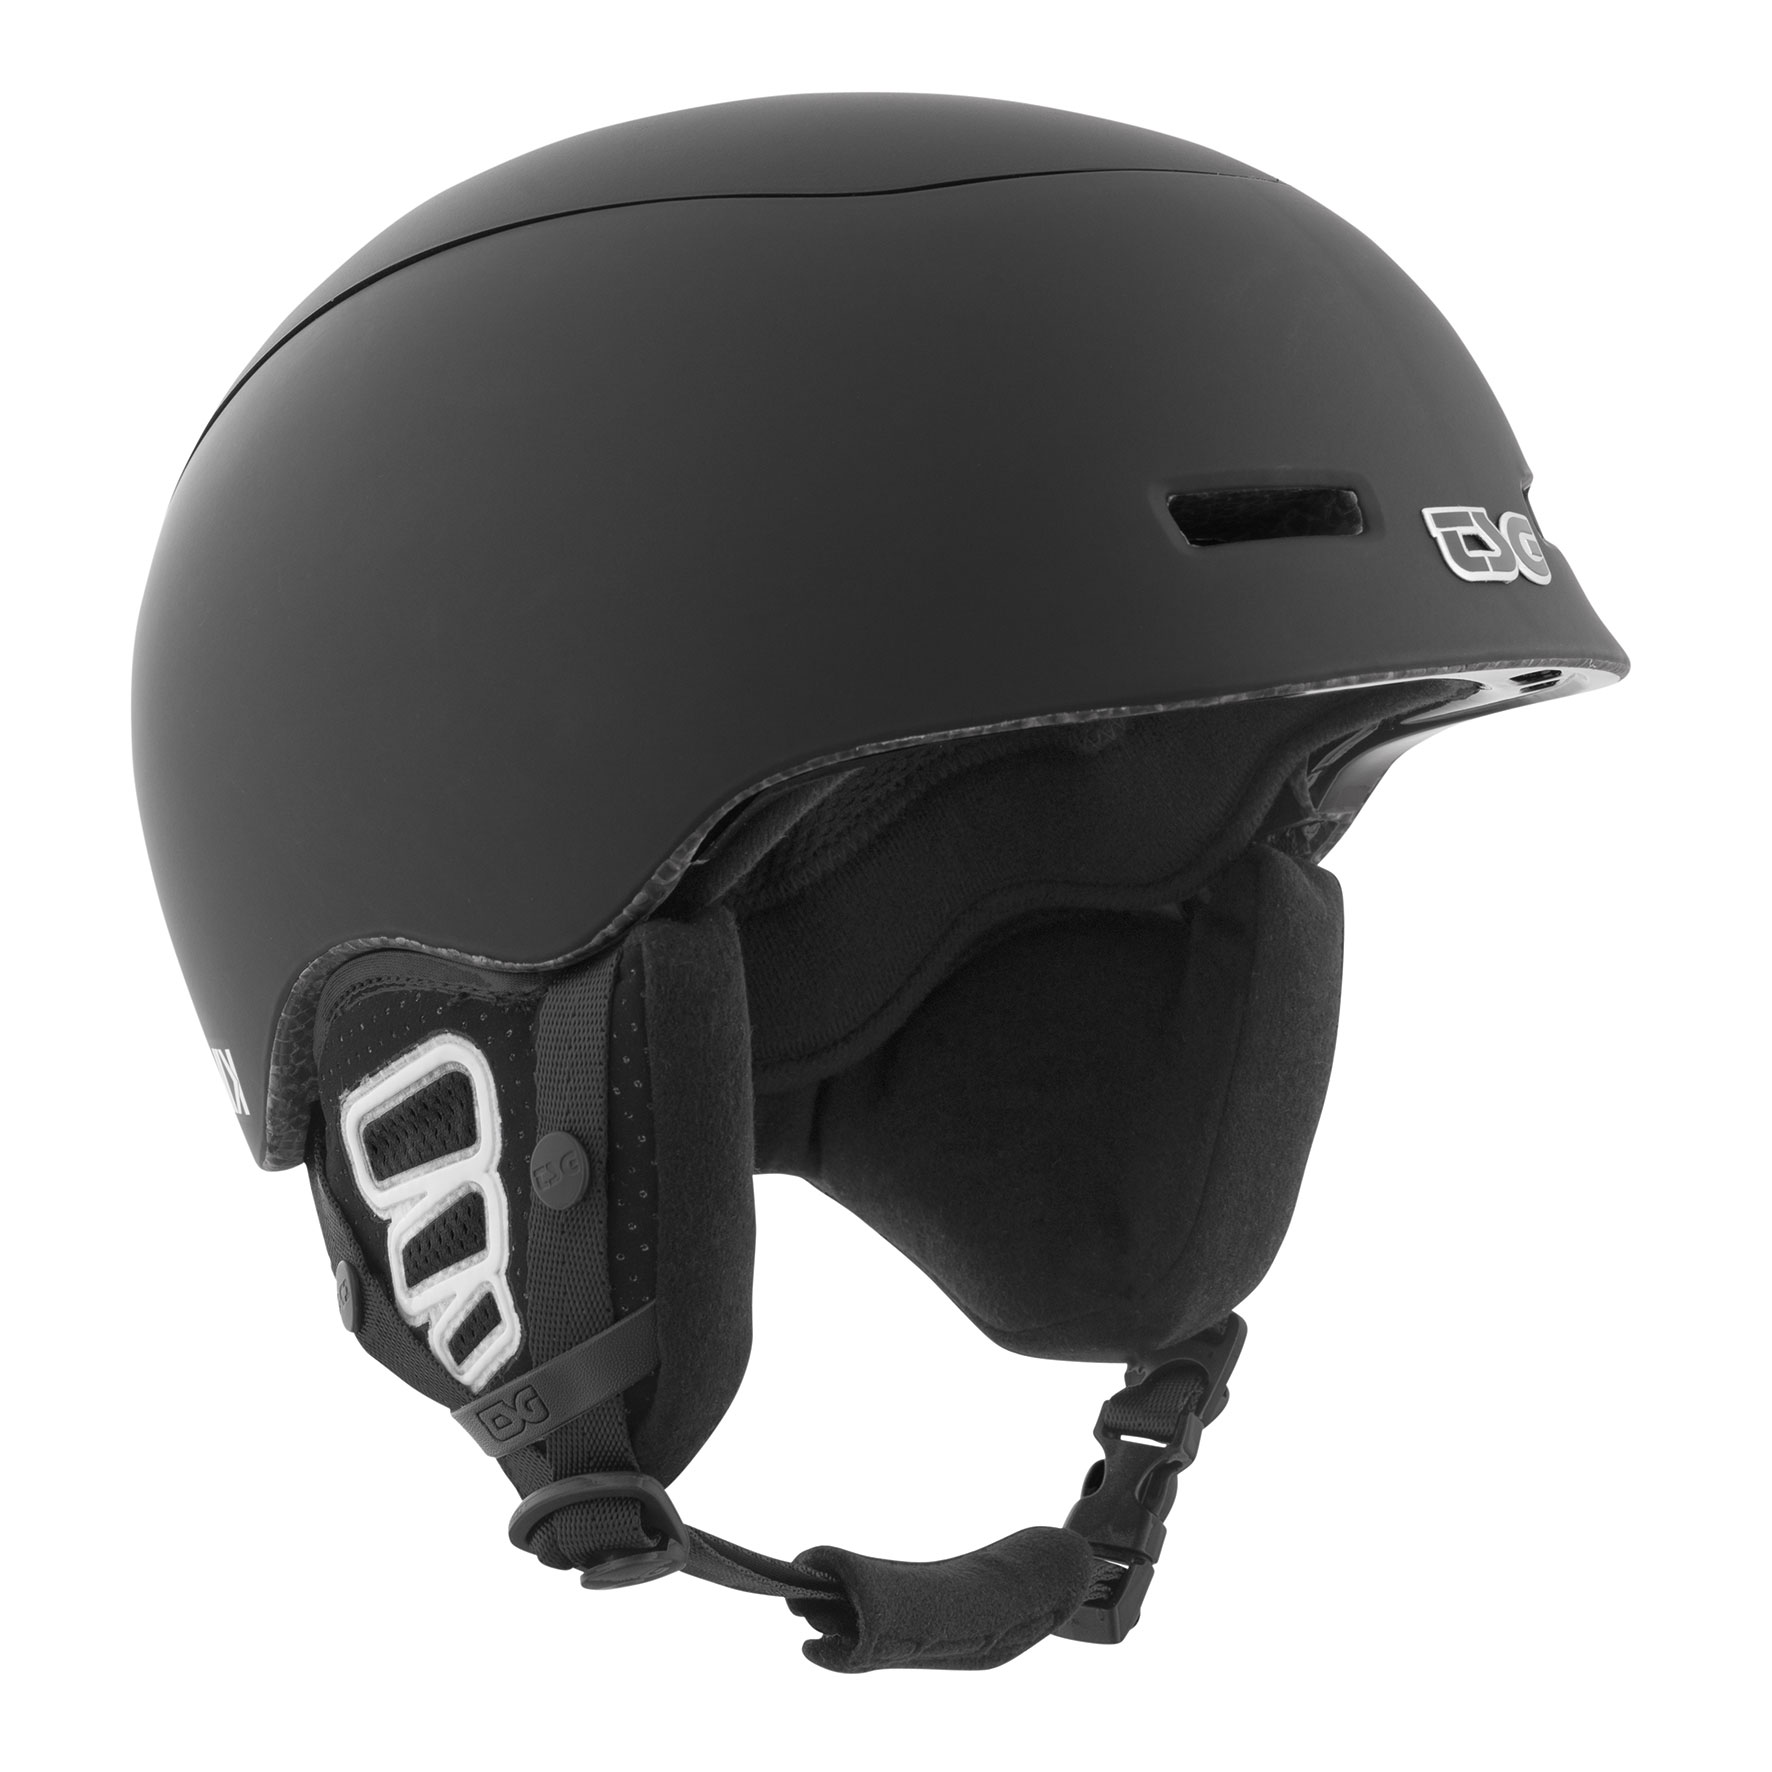 Größe Helme: L/XL (57-59cm), Farbe NEU: flat black